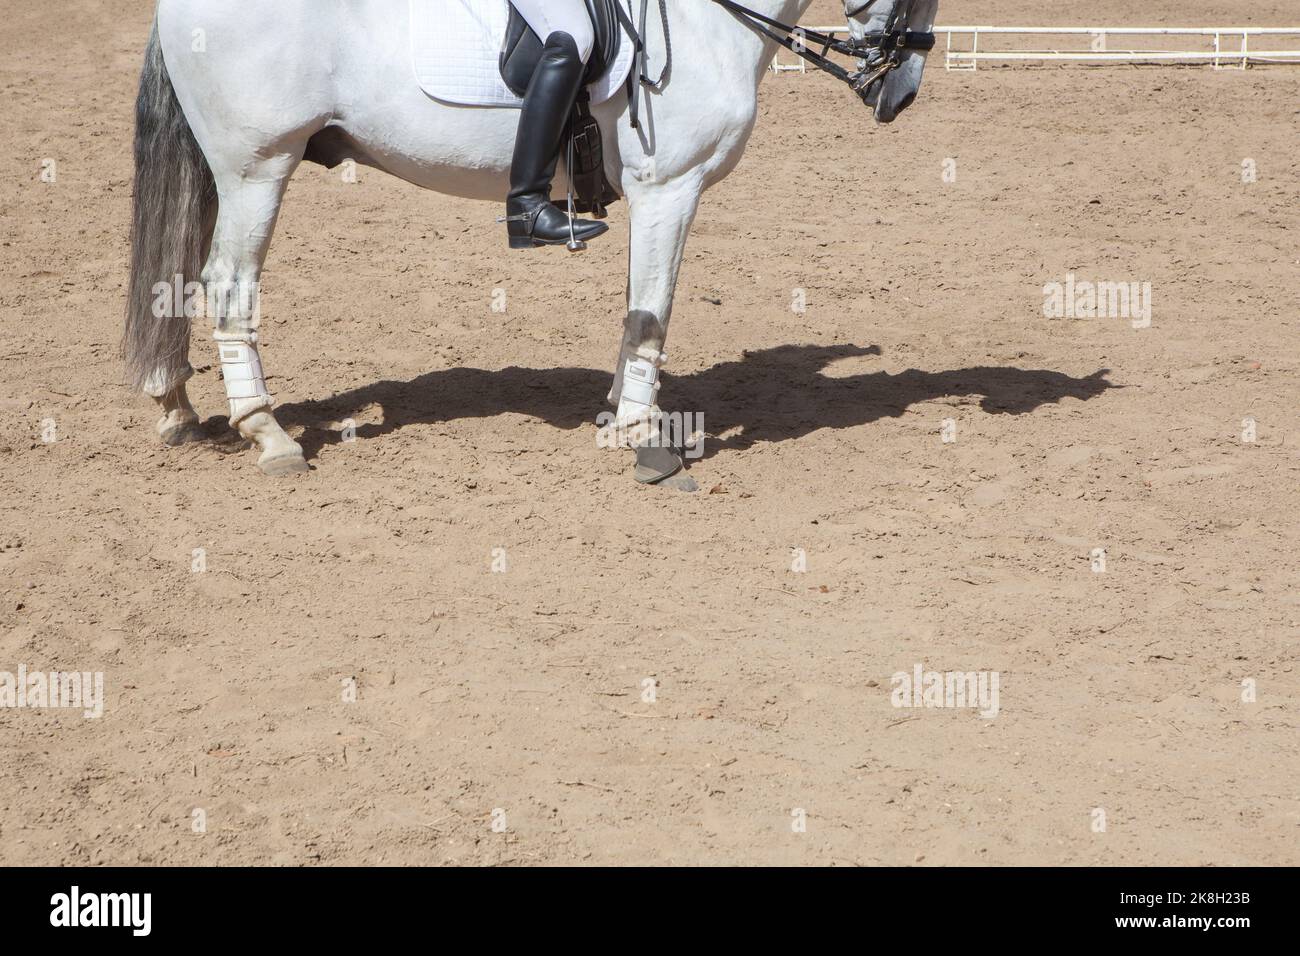 Purebred Spanish Horses exhibition. Rider and Mount Envelope Stock Photo